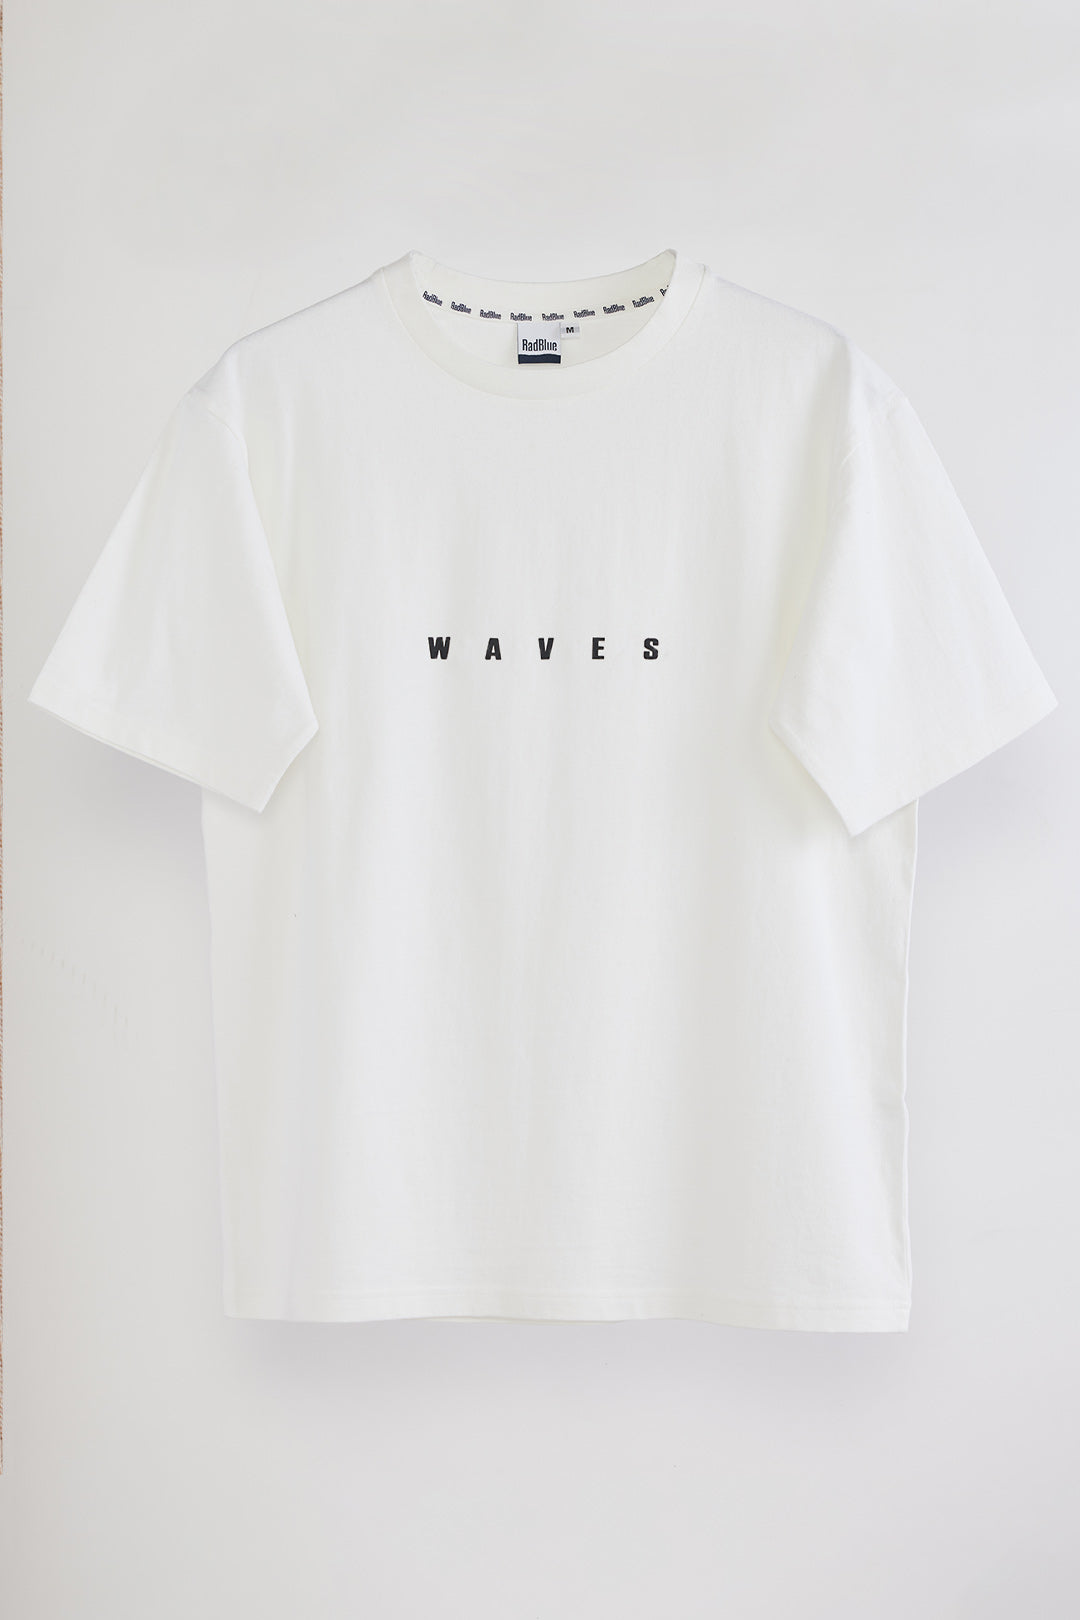 OEコットン 半袖メンズTシャツ【WAVES】